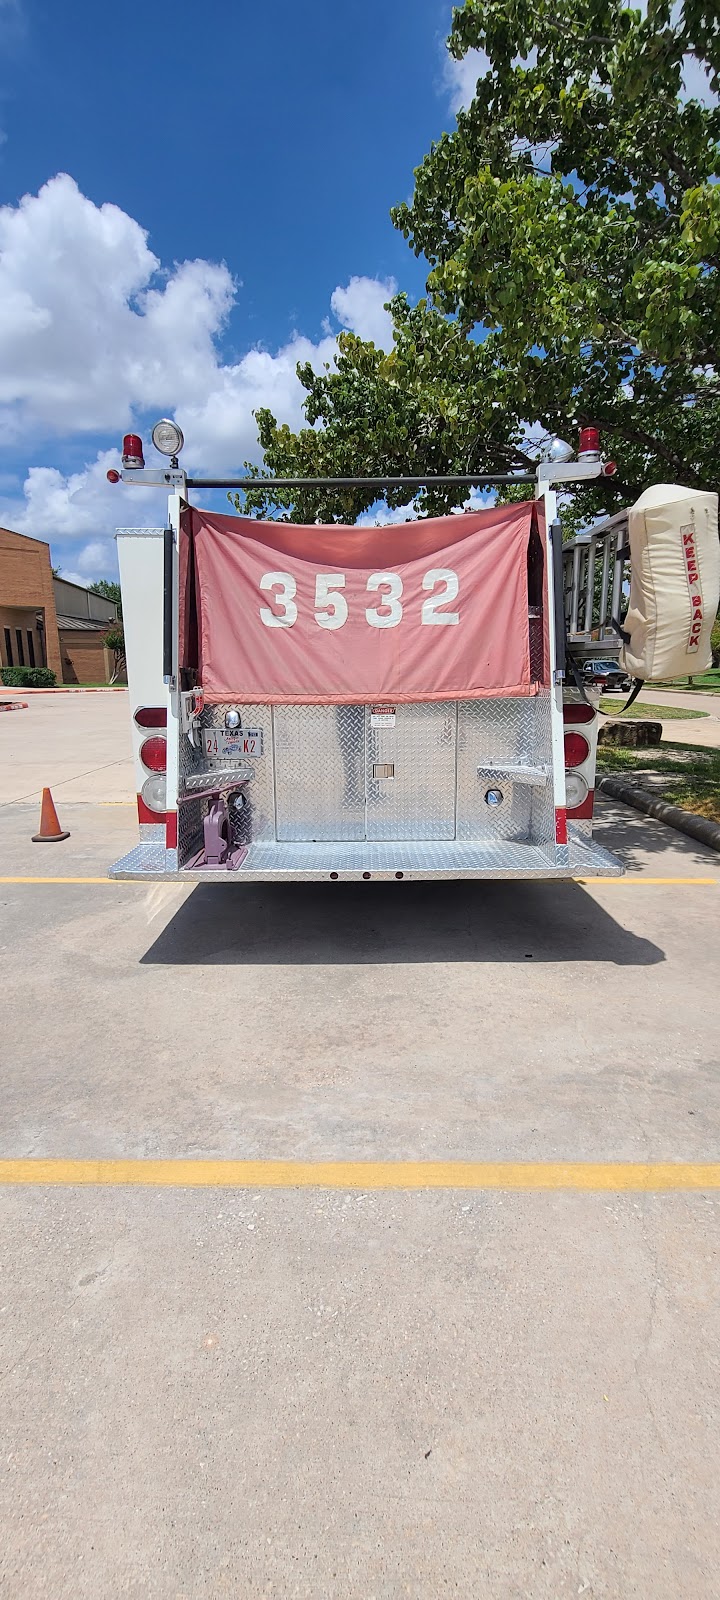 Jersey Village Fire Department | 16503 Jersey Dr, Houston, TX 77040 | Phone: (713) 466-2130